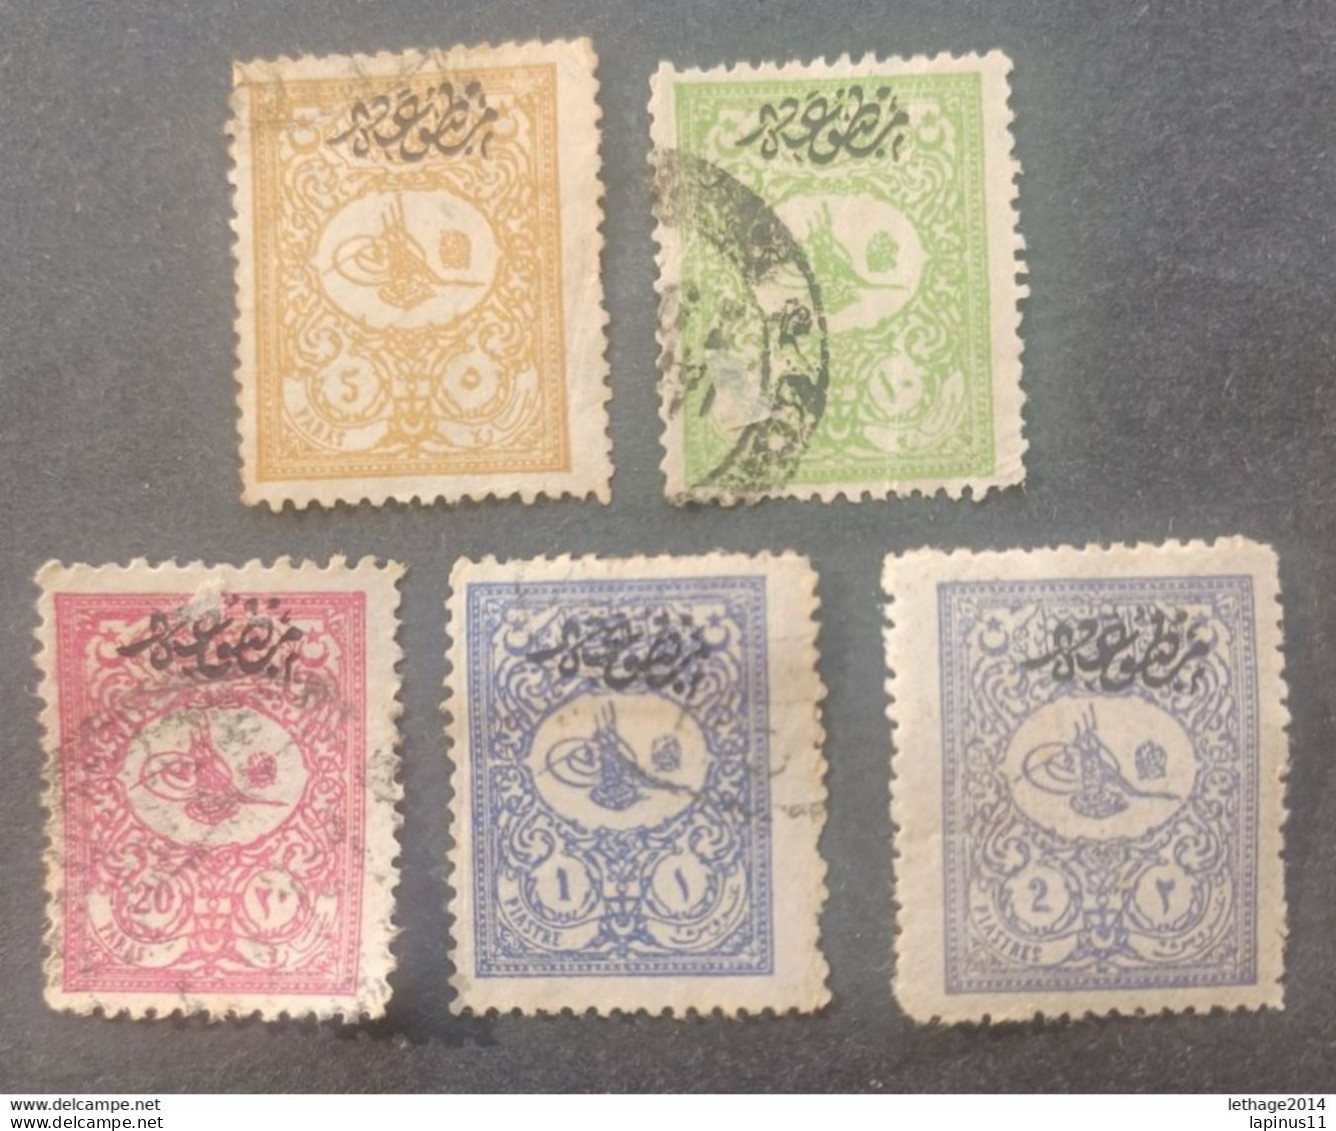 TURKEY OTTOMAN العثماني التركي Türkiye 1901 SERVICE STAMPS FOR ABROAD CAT UNIF 17/21 ERROR DECAL OVERPRINTED - Used Stamps